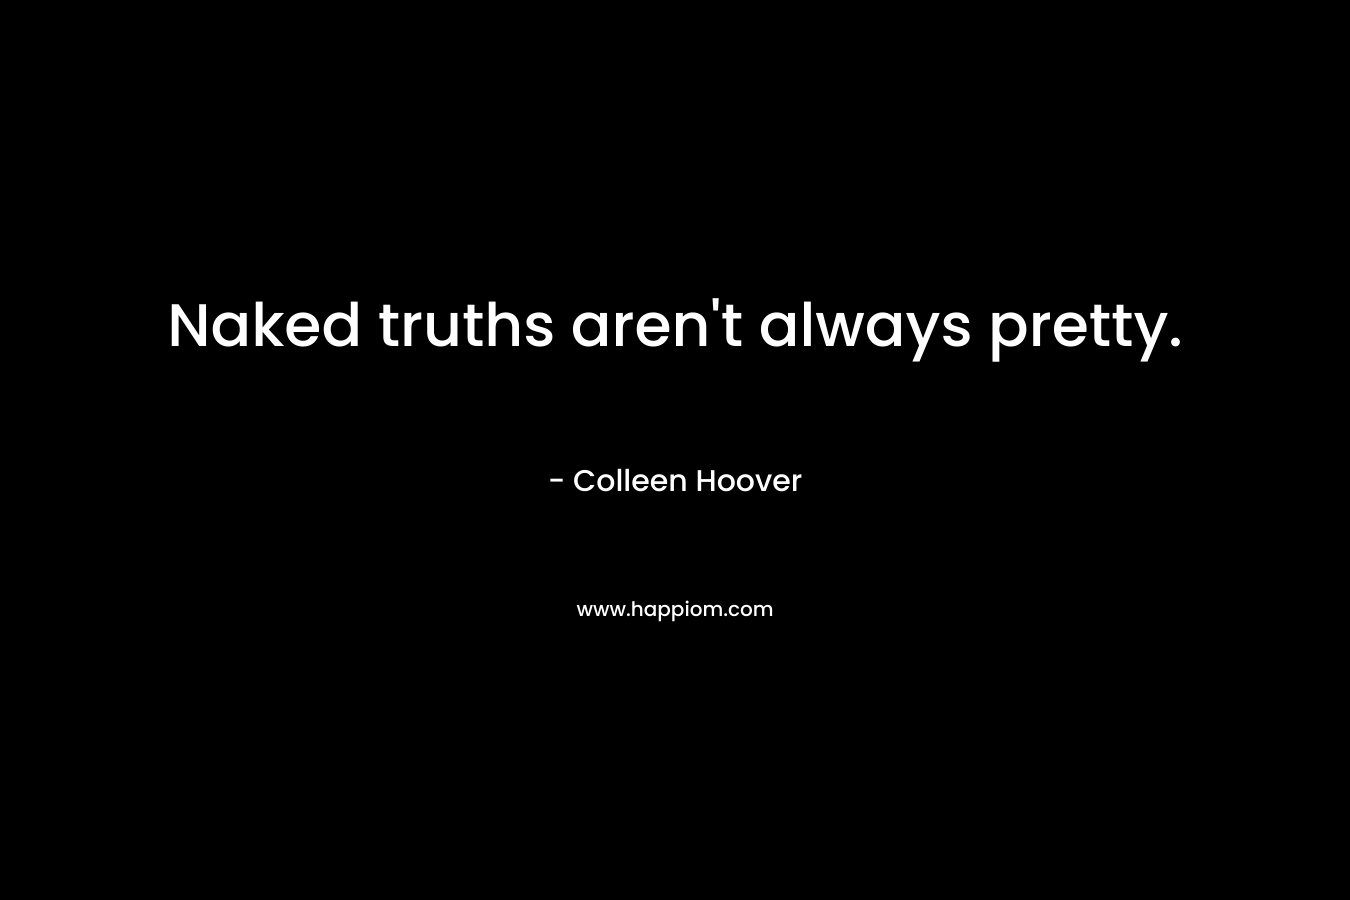 Naked truths aren't always pretty.